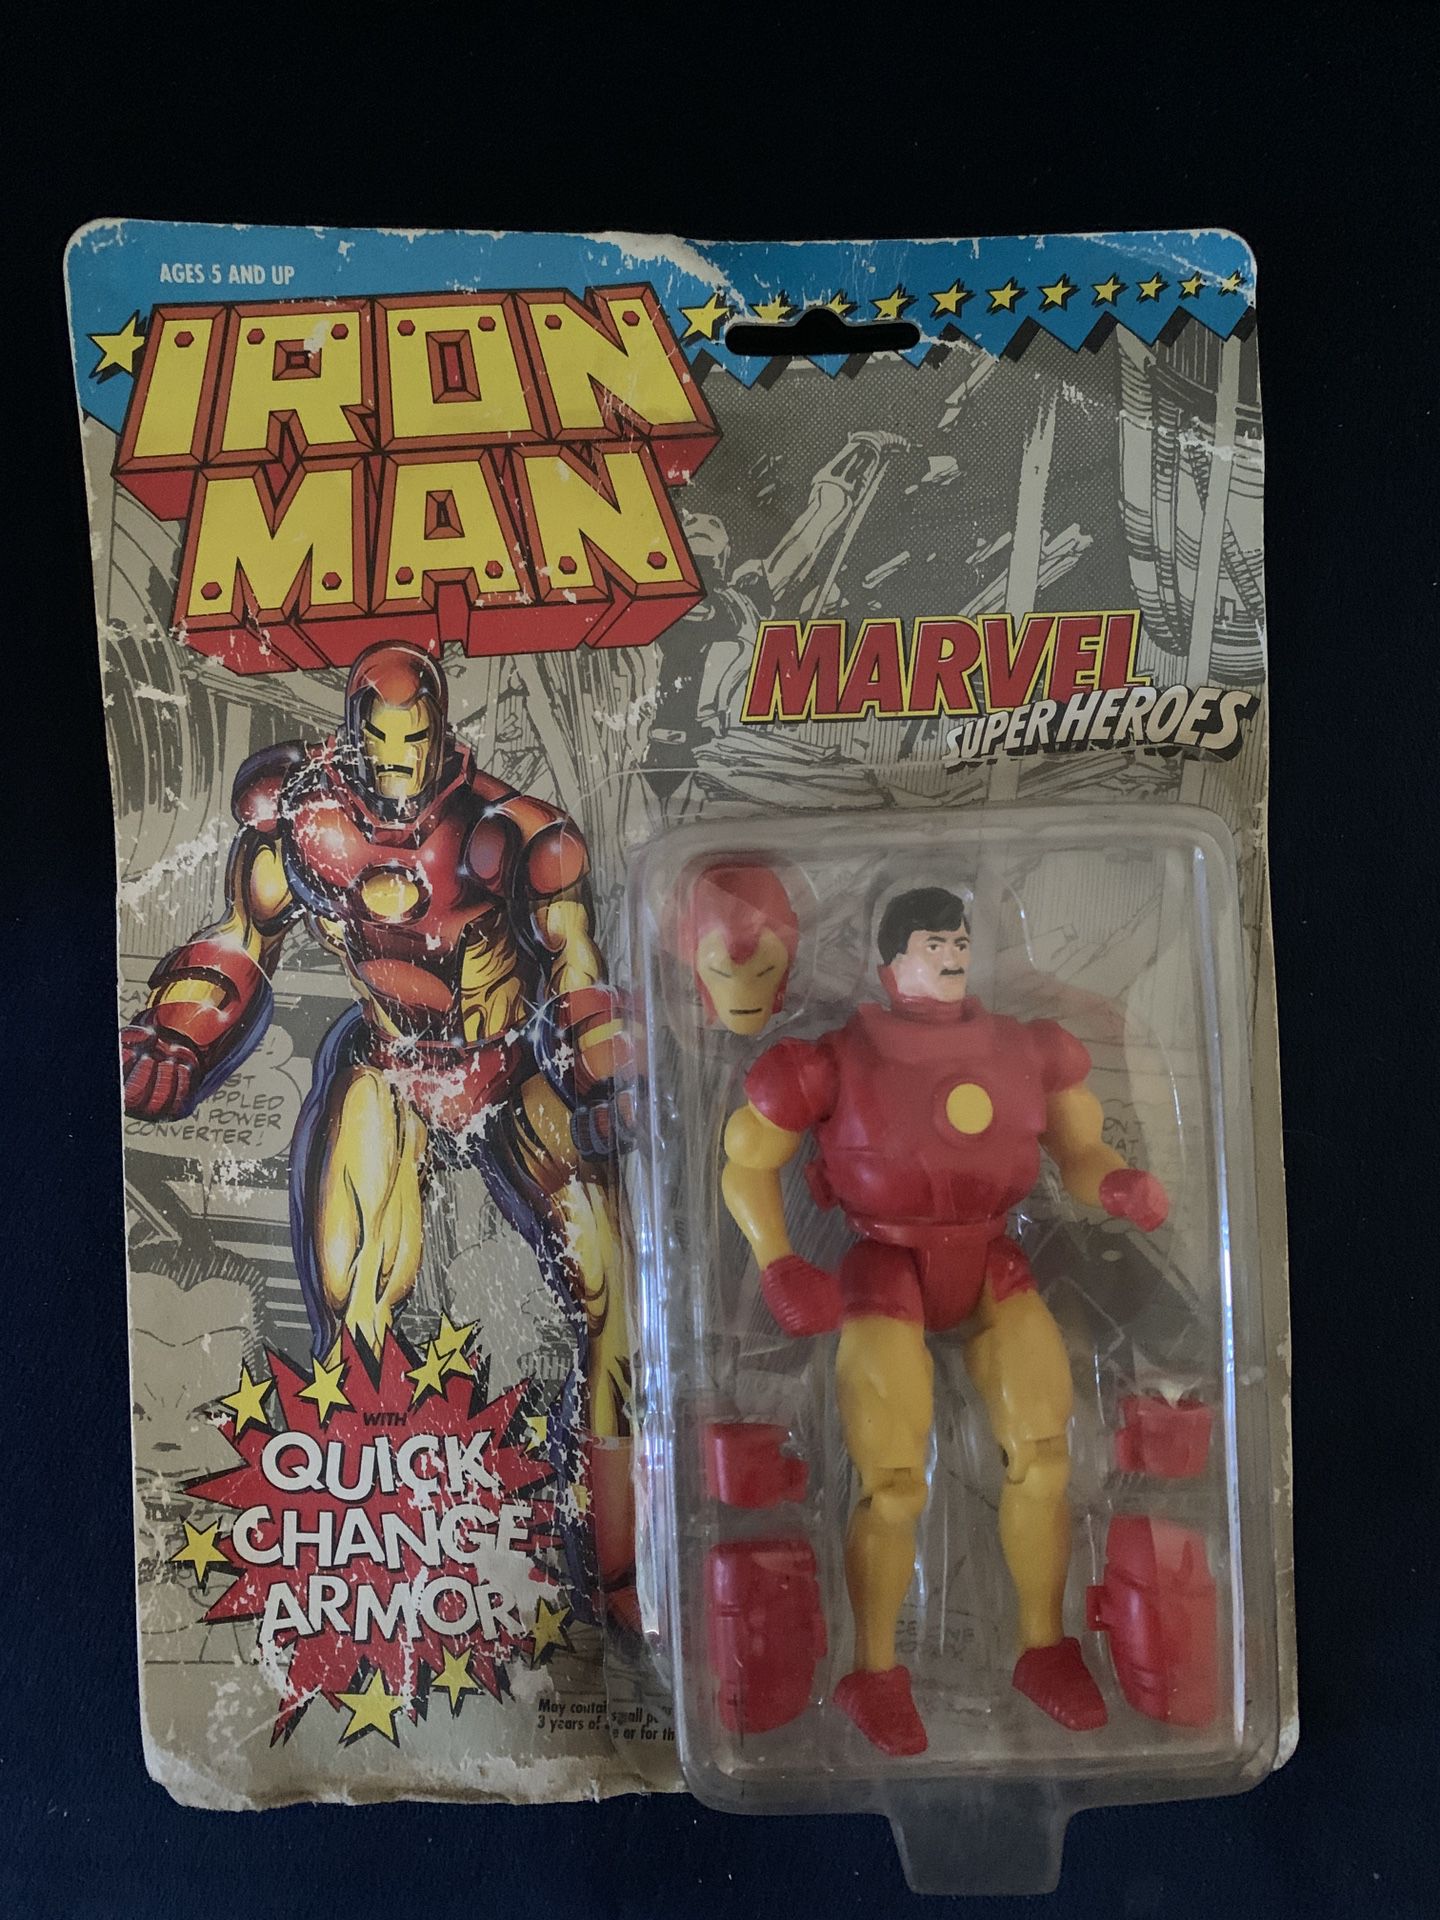 1991 Iron Man Marvel super heroes action figure.